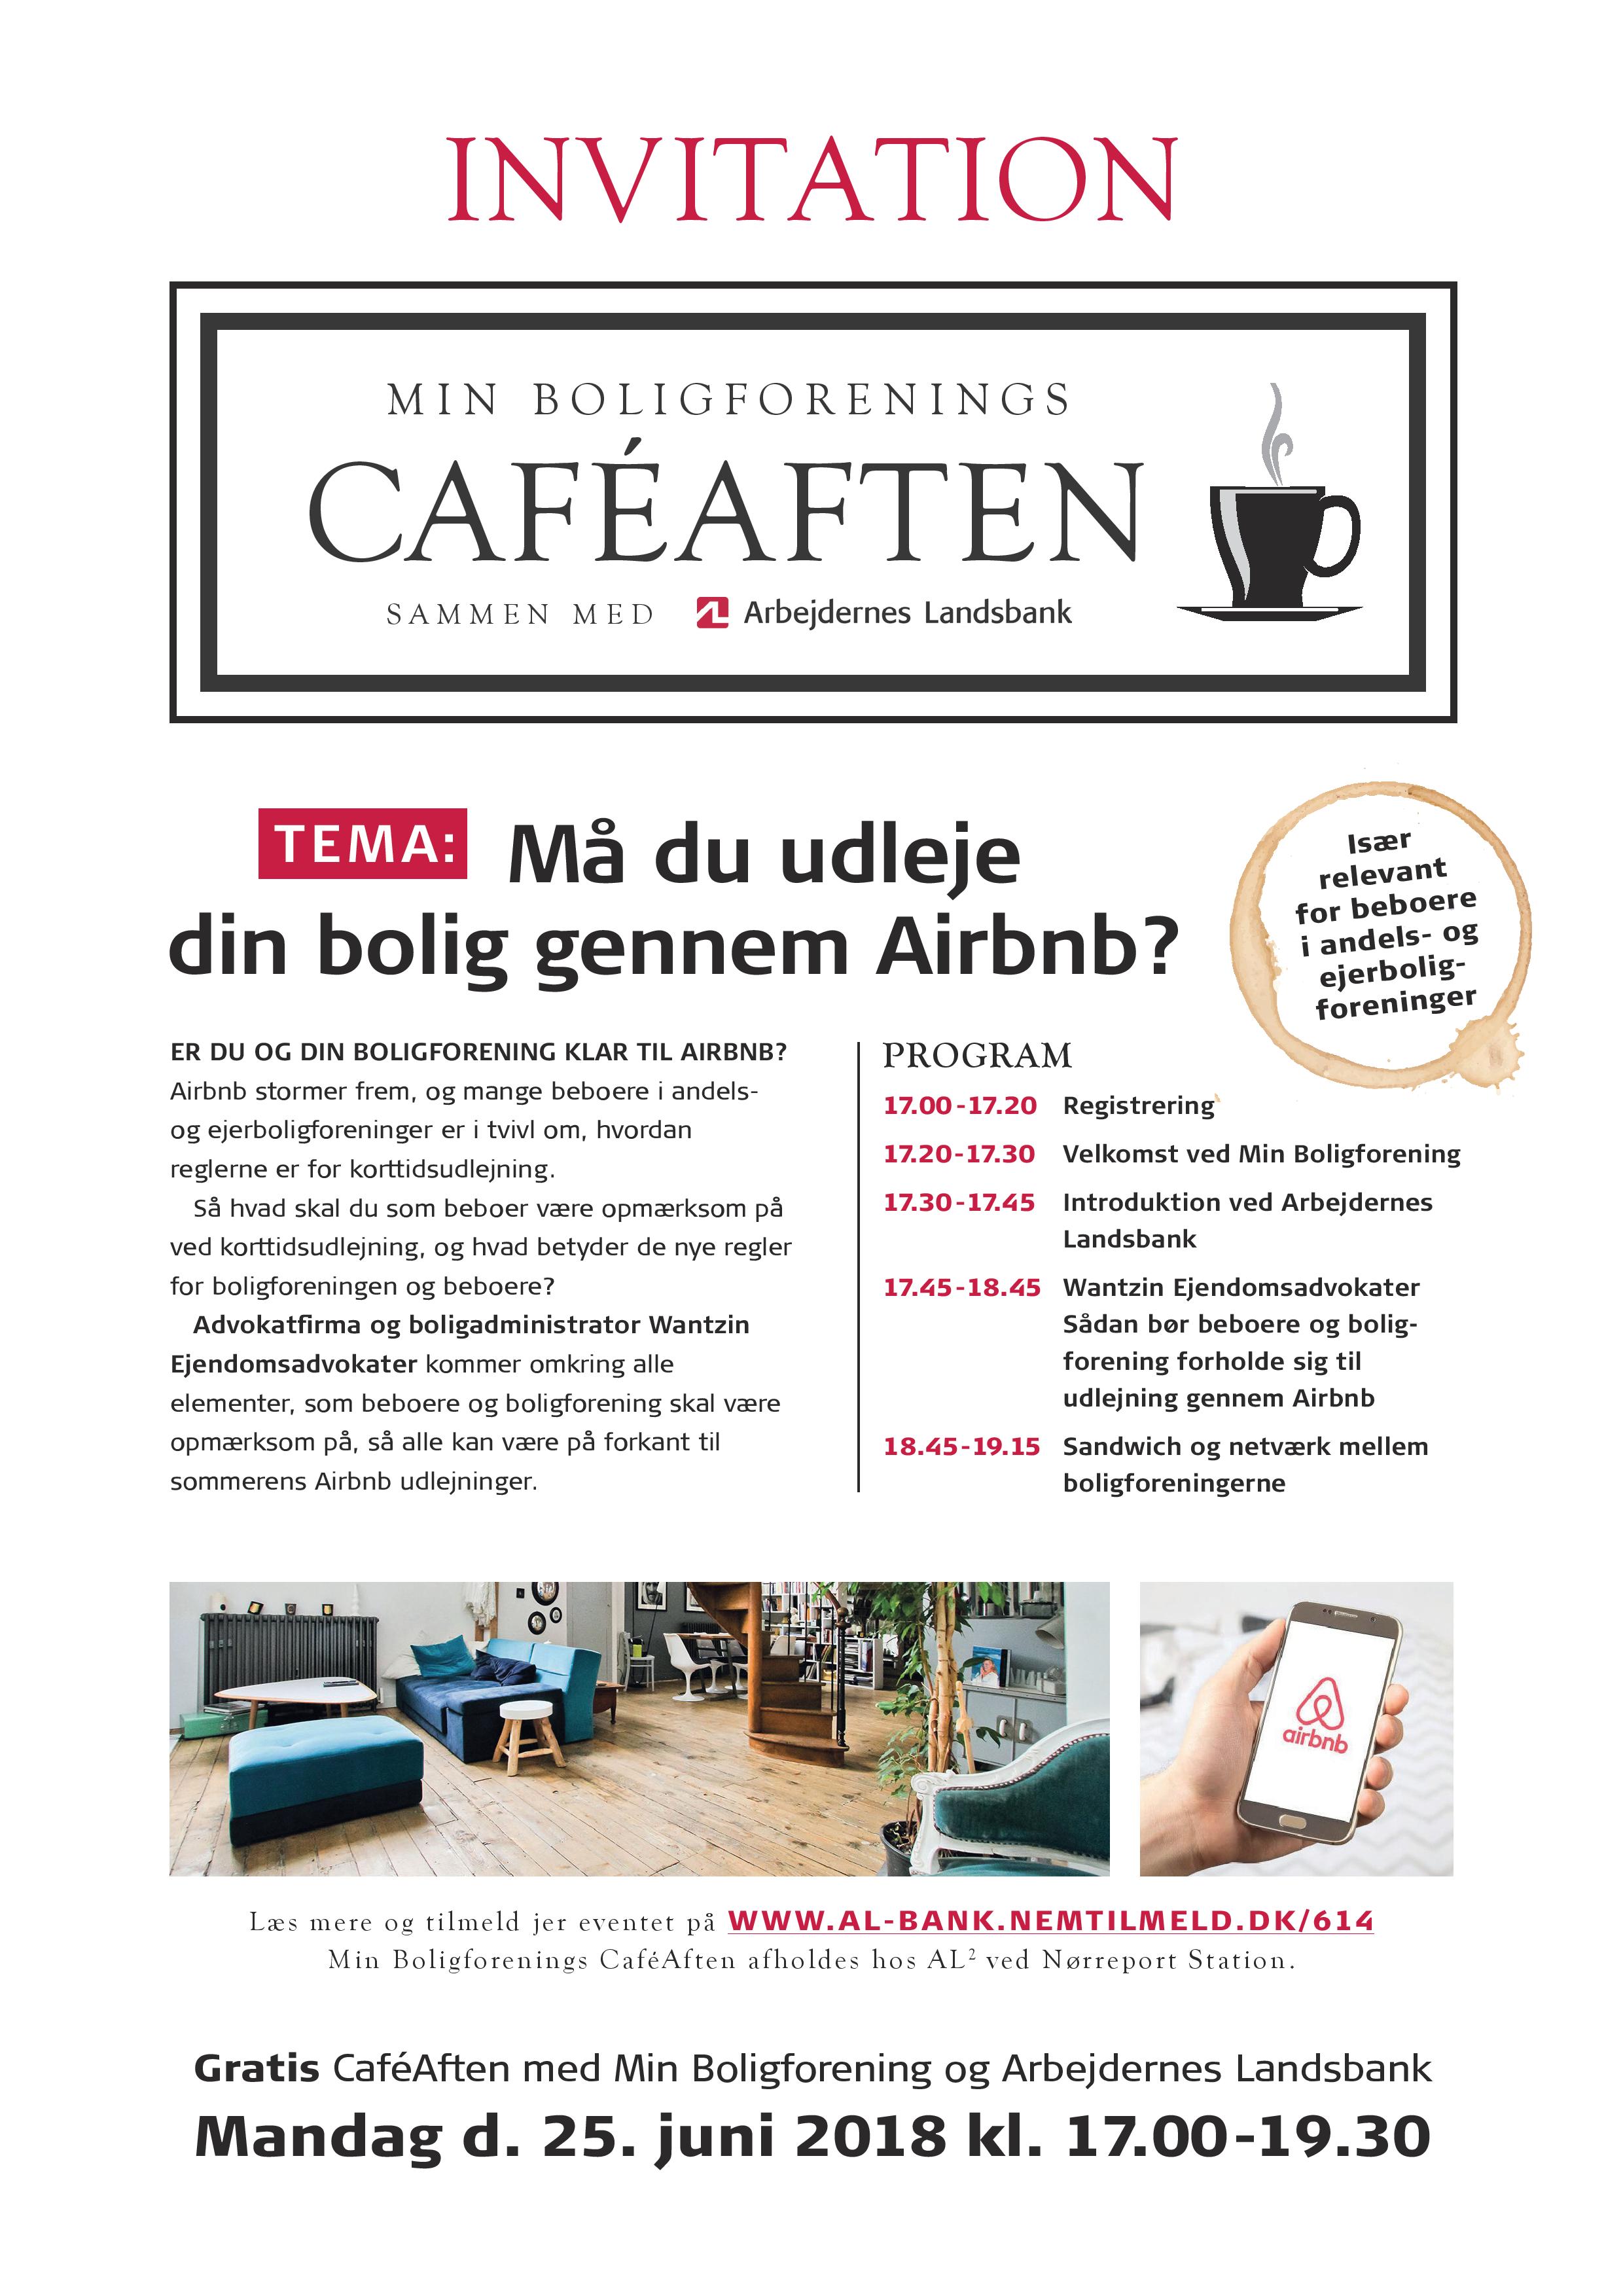 Caféaften_invitation_vers4-page-001.jpg